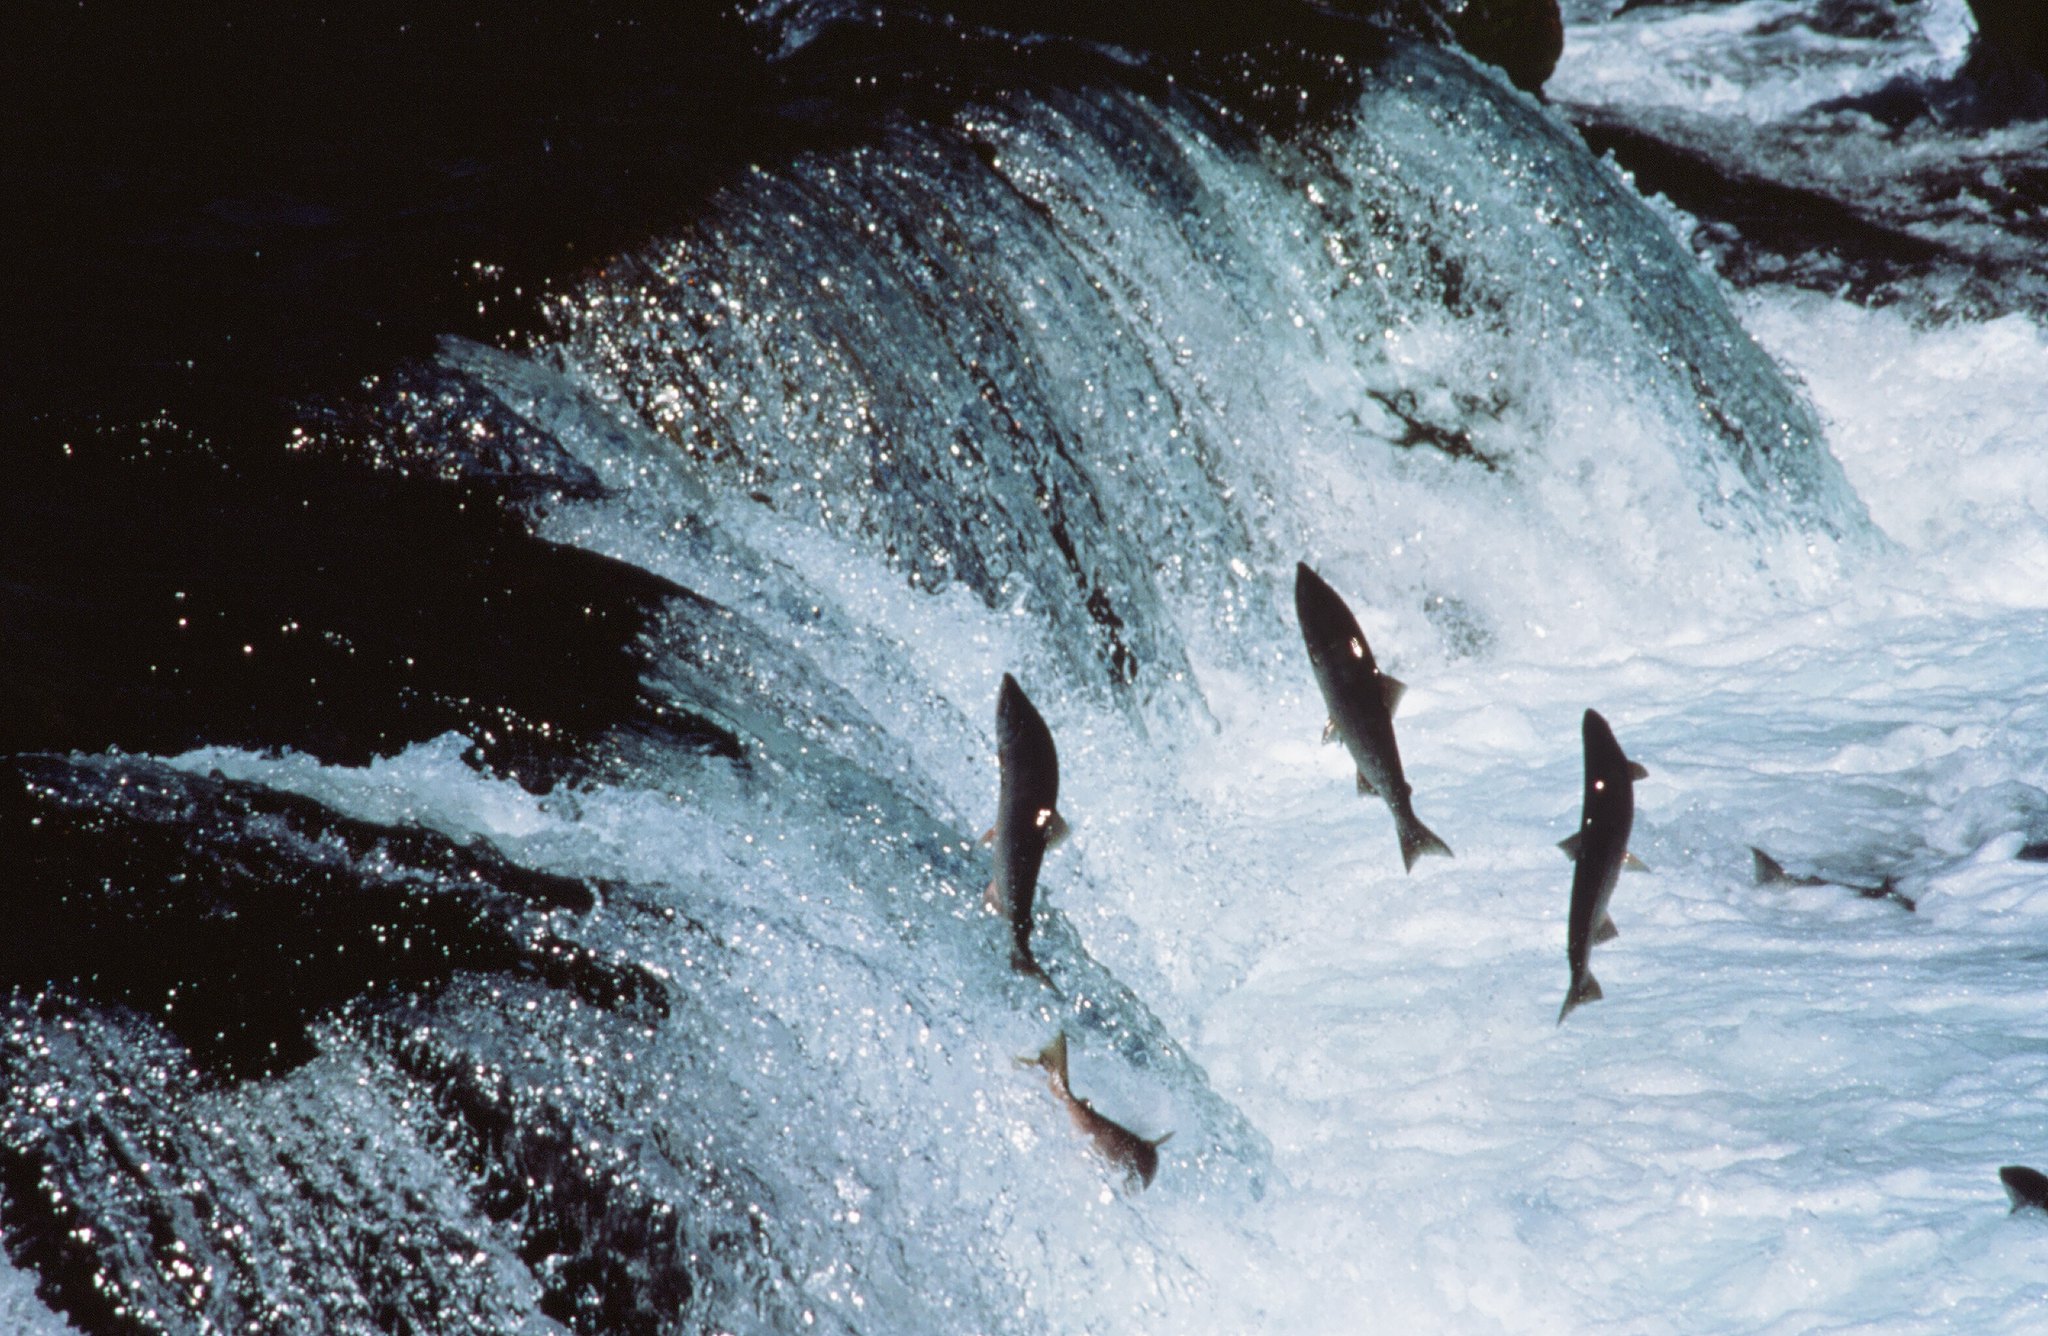 jumping salmon